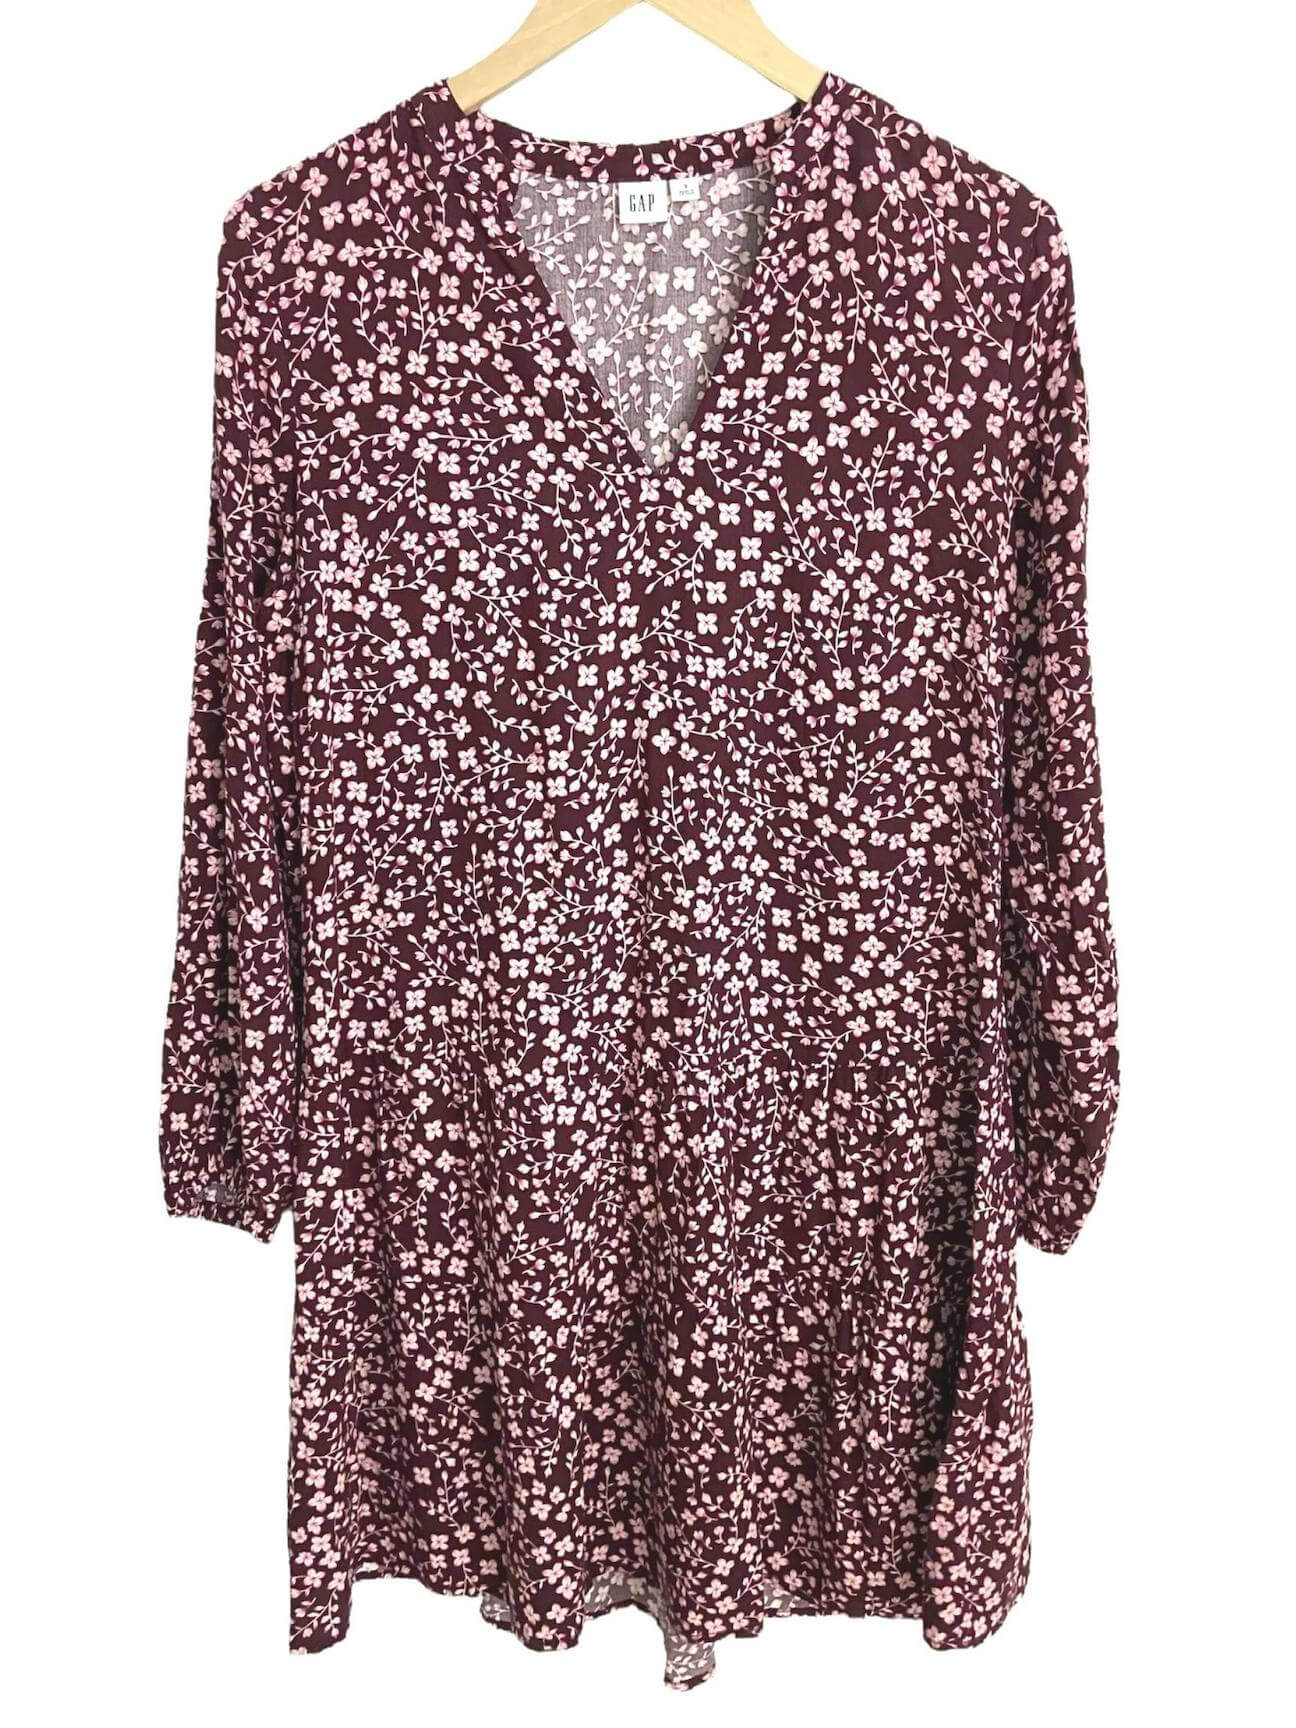 Soft Summer GAP floral print dress